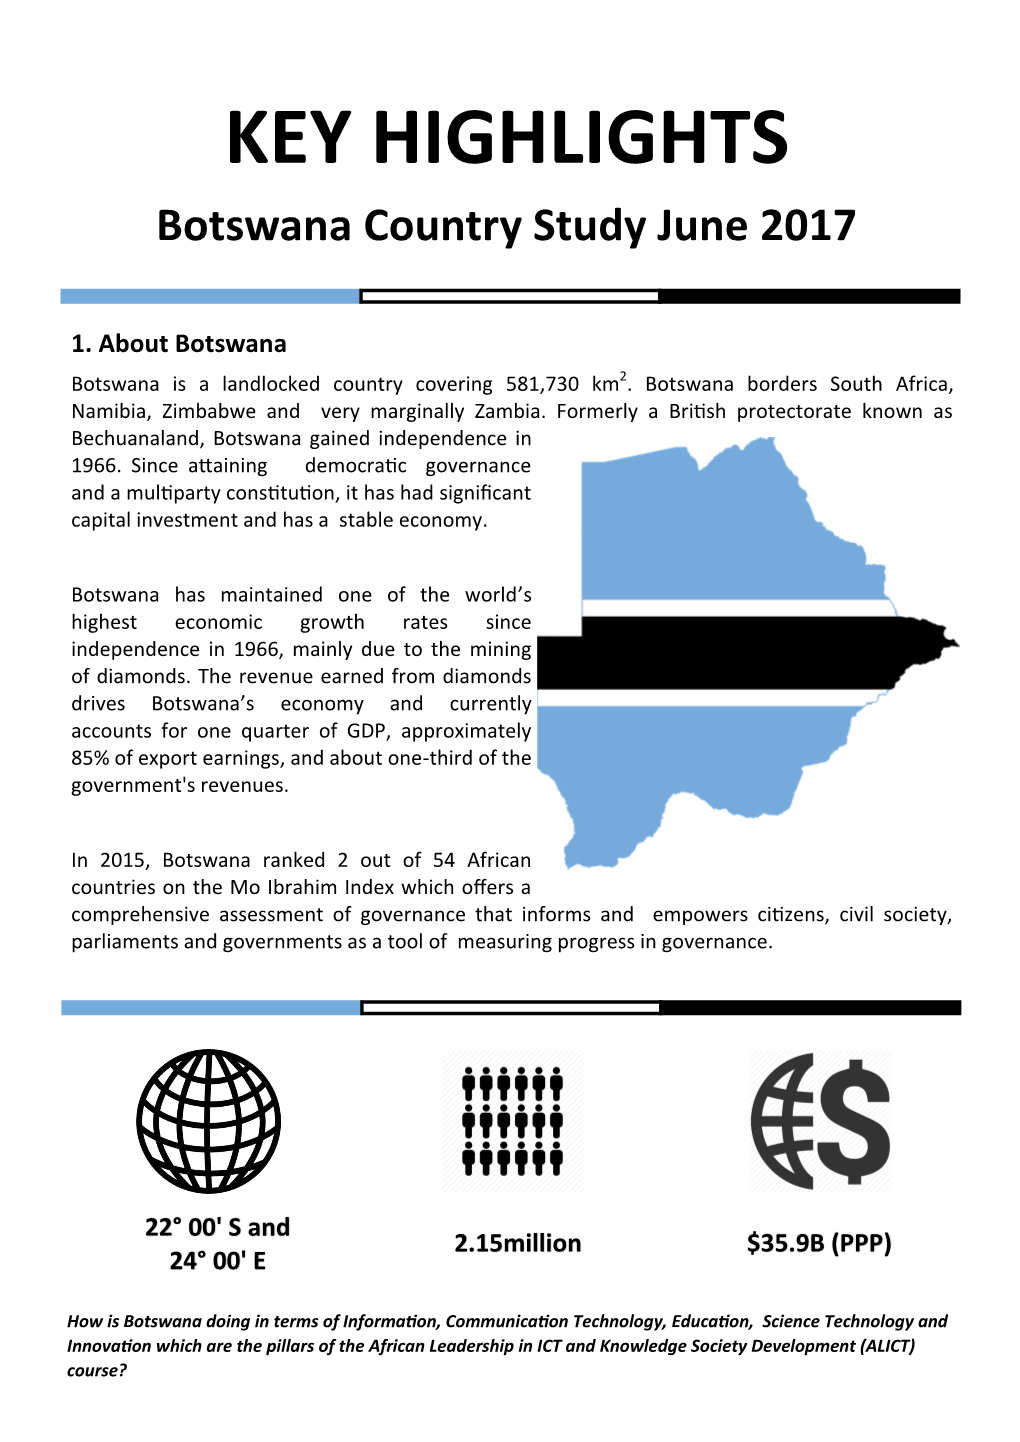 KEY HIGHLIGHTS Botswana Country Study June 2017